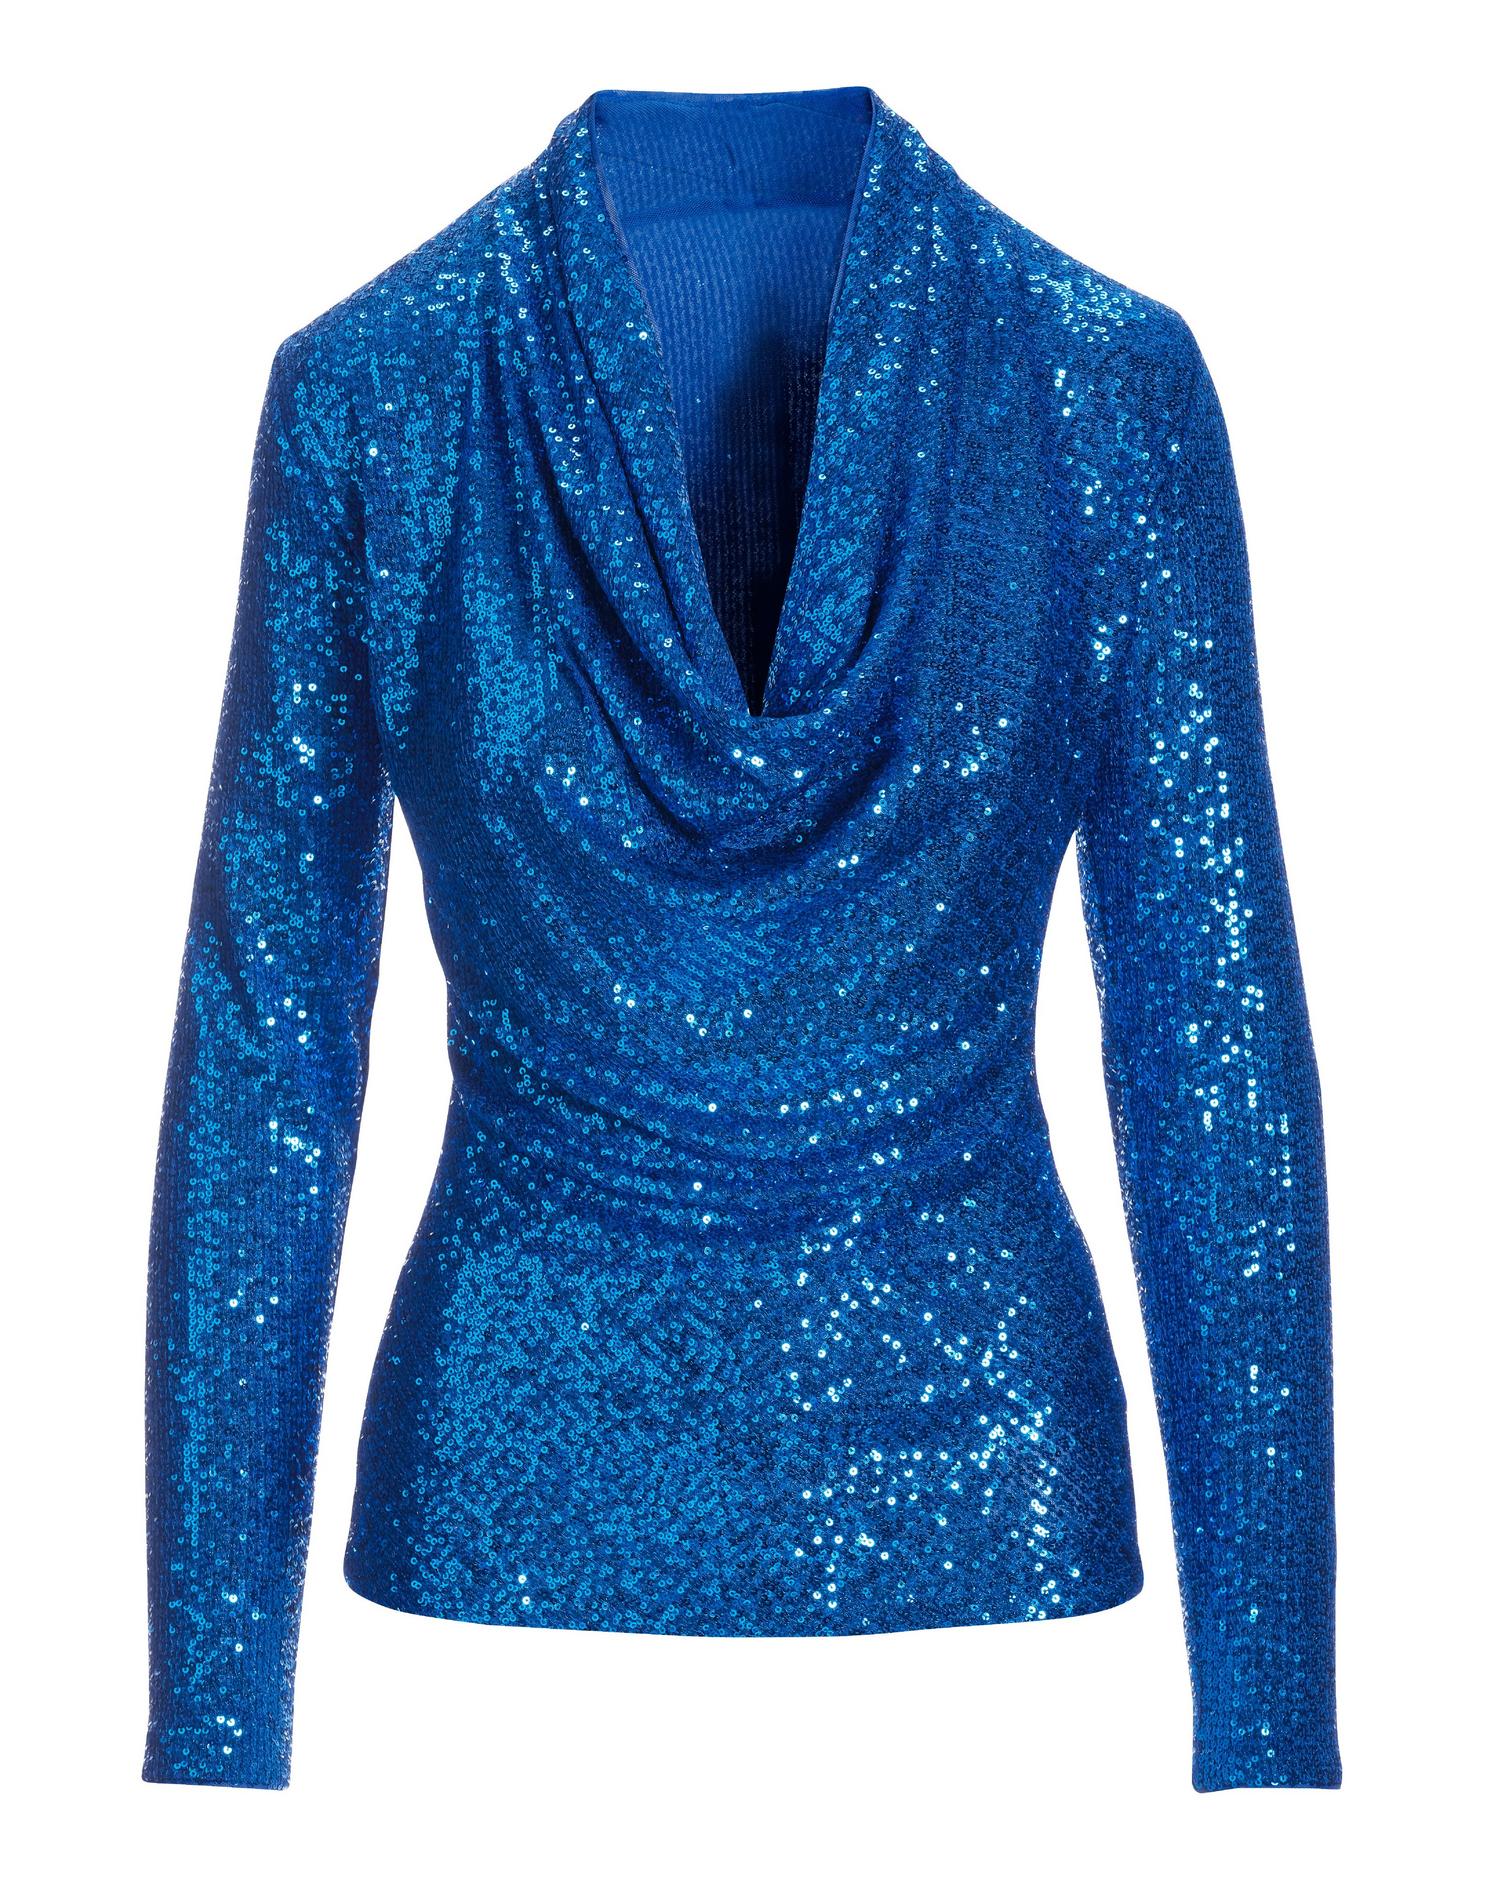 Sequin Cowl Neck Knit Top - Classic Blue | Boston Proper